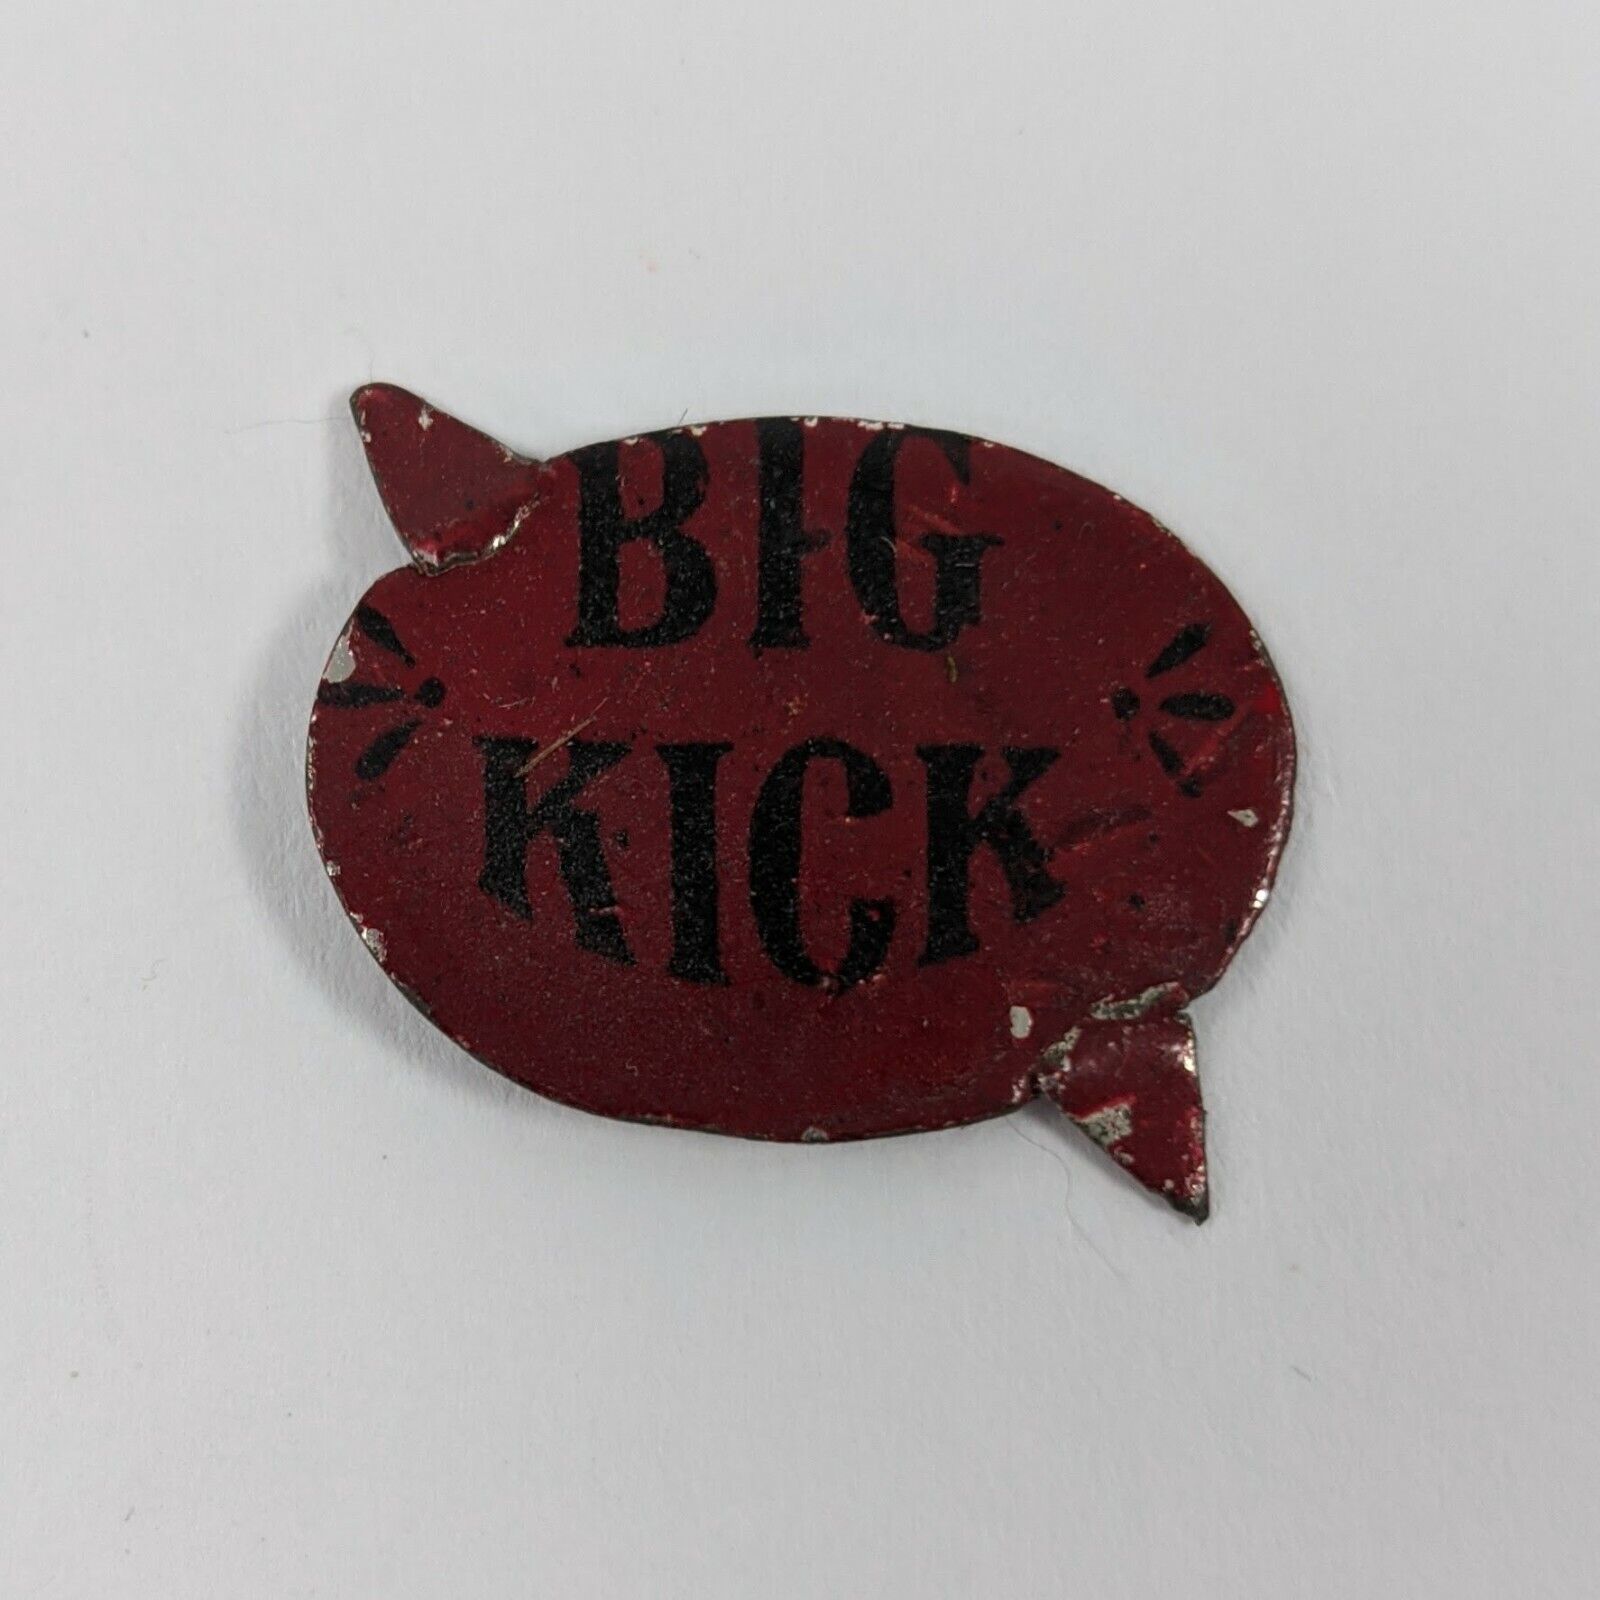 Big Kick Tobacco Tin Tag Antique Vintage Advertising